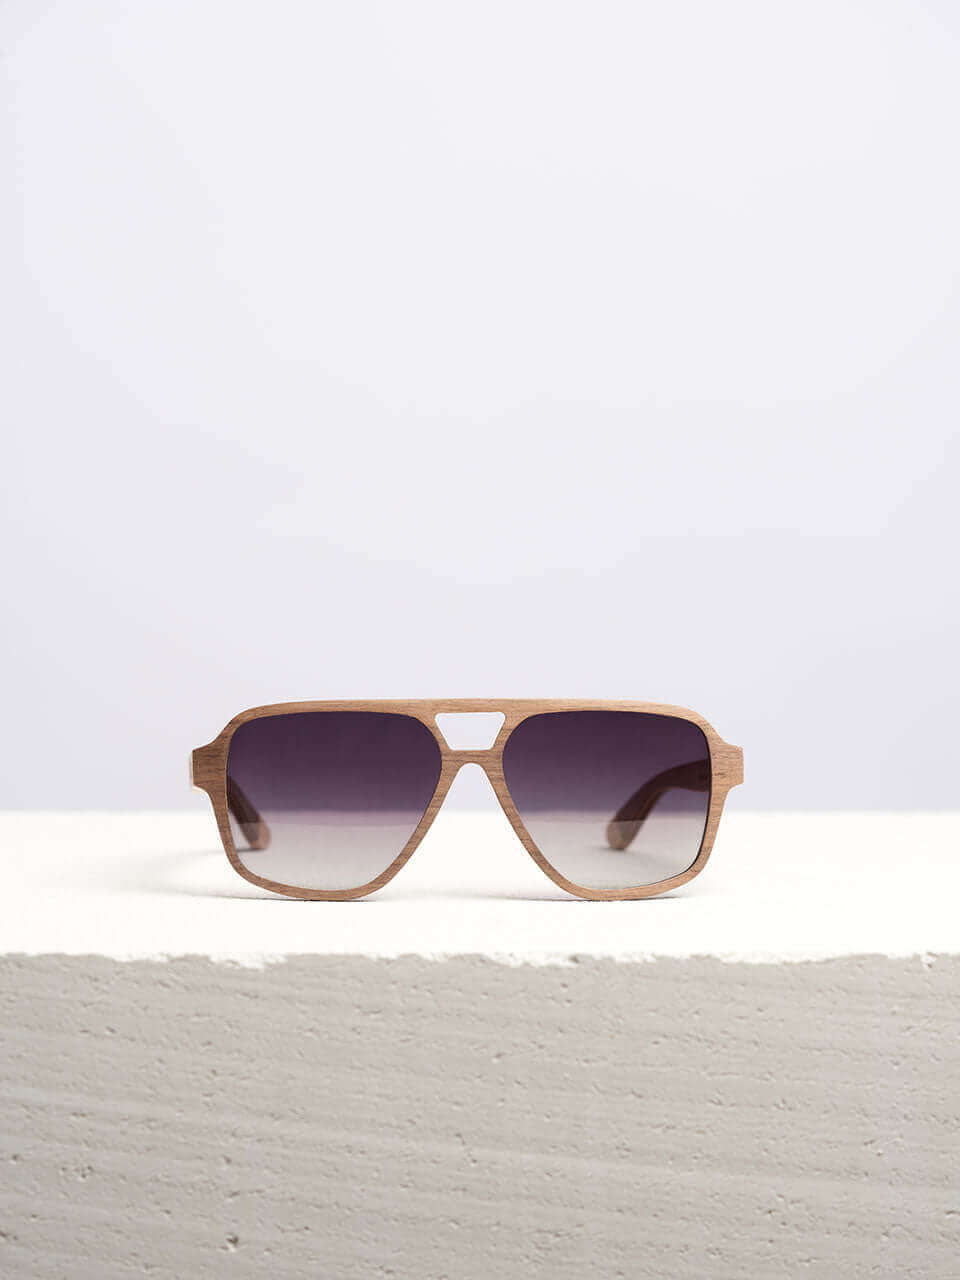 sunglasses on white platform